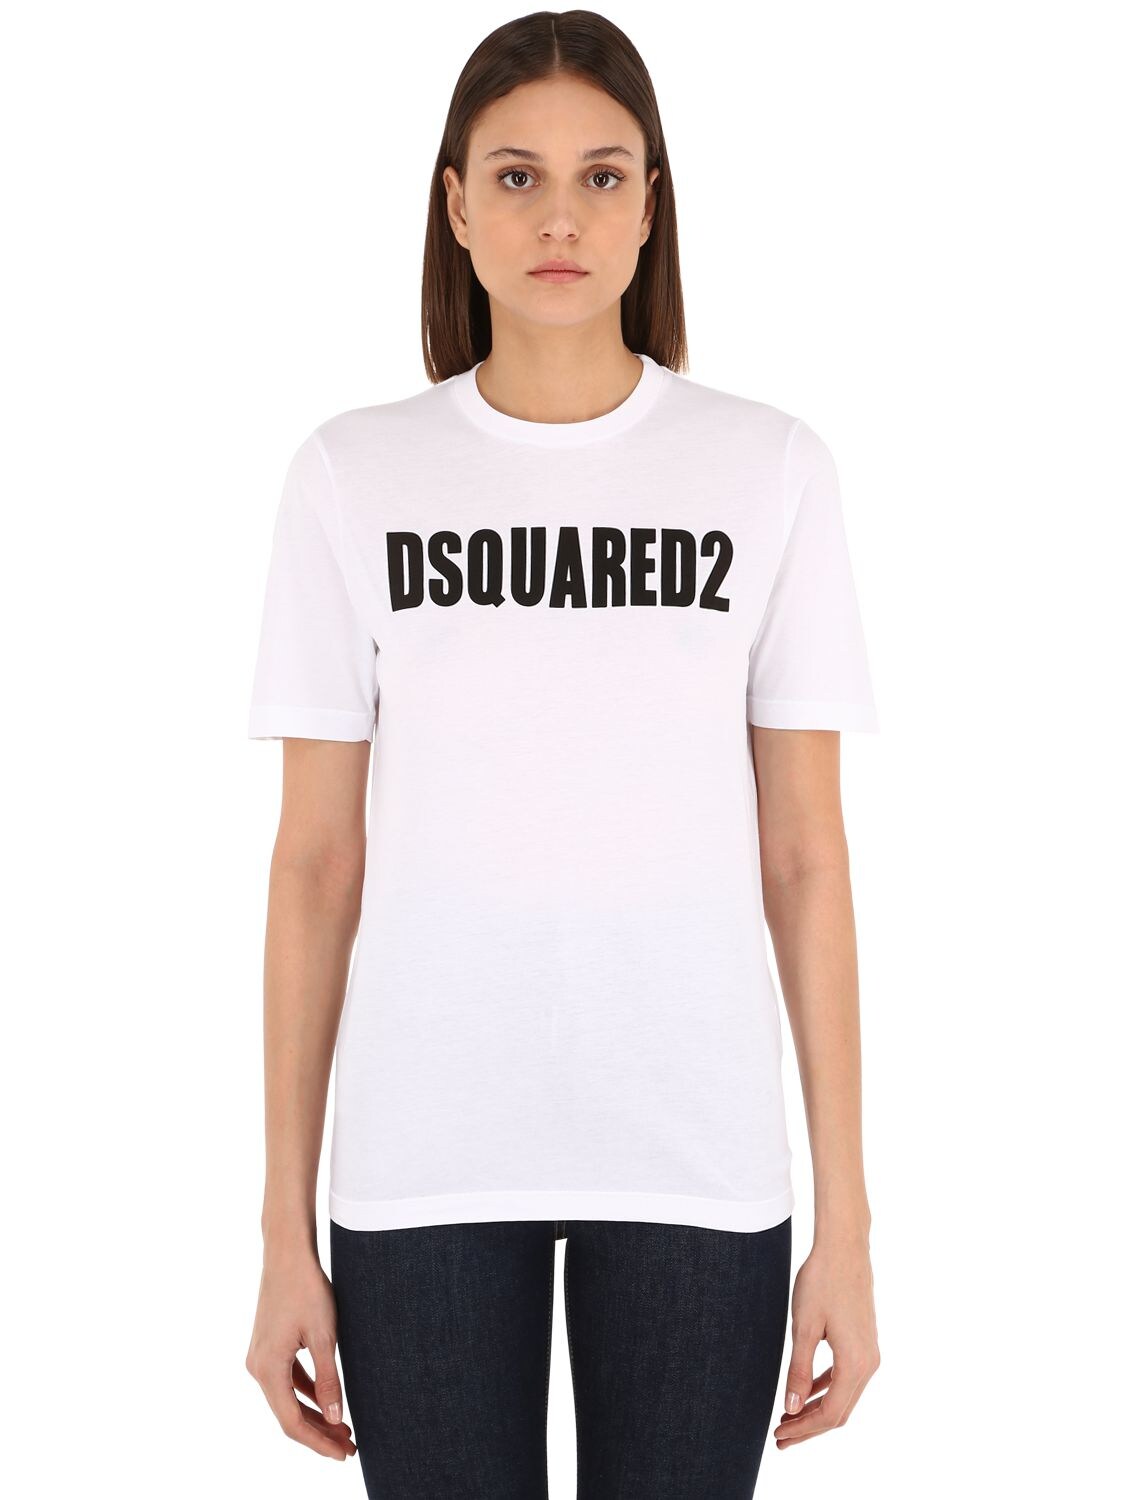 Dsquared2 Women's S72gd0147s21600100 White Cotton T-shirt